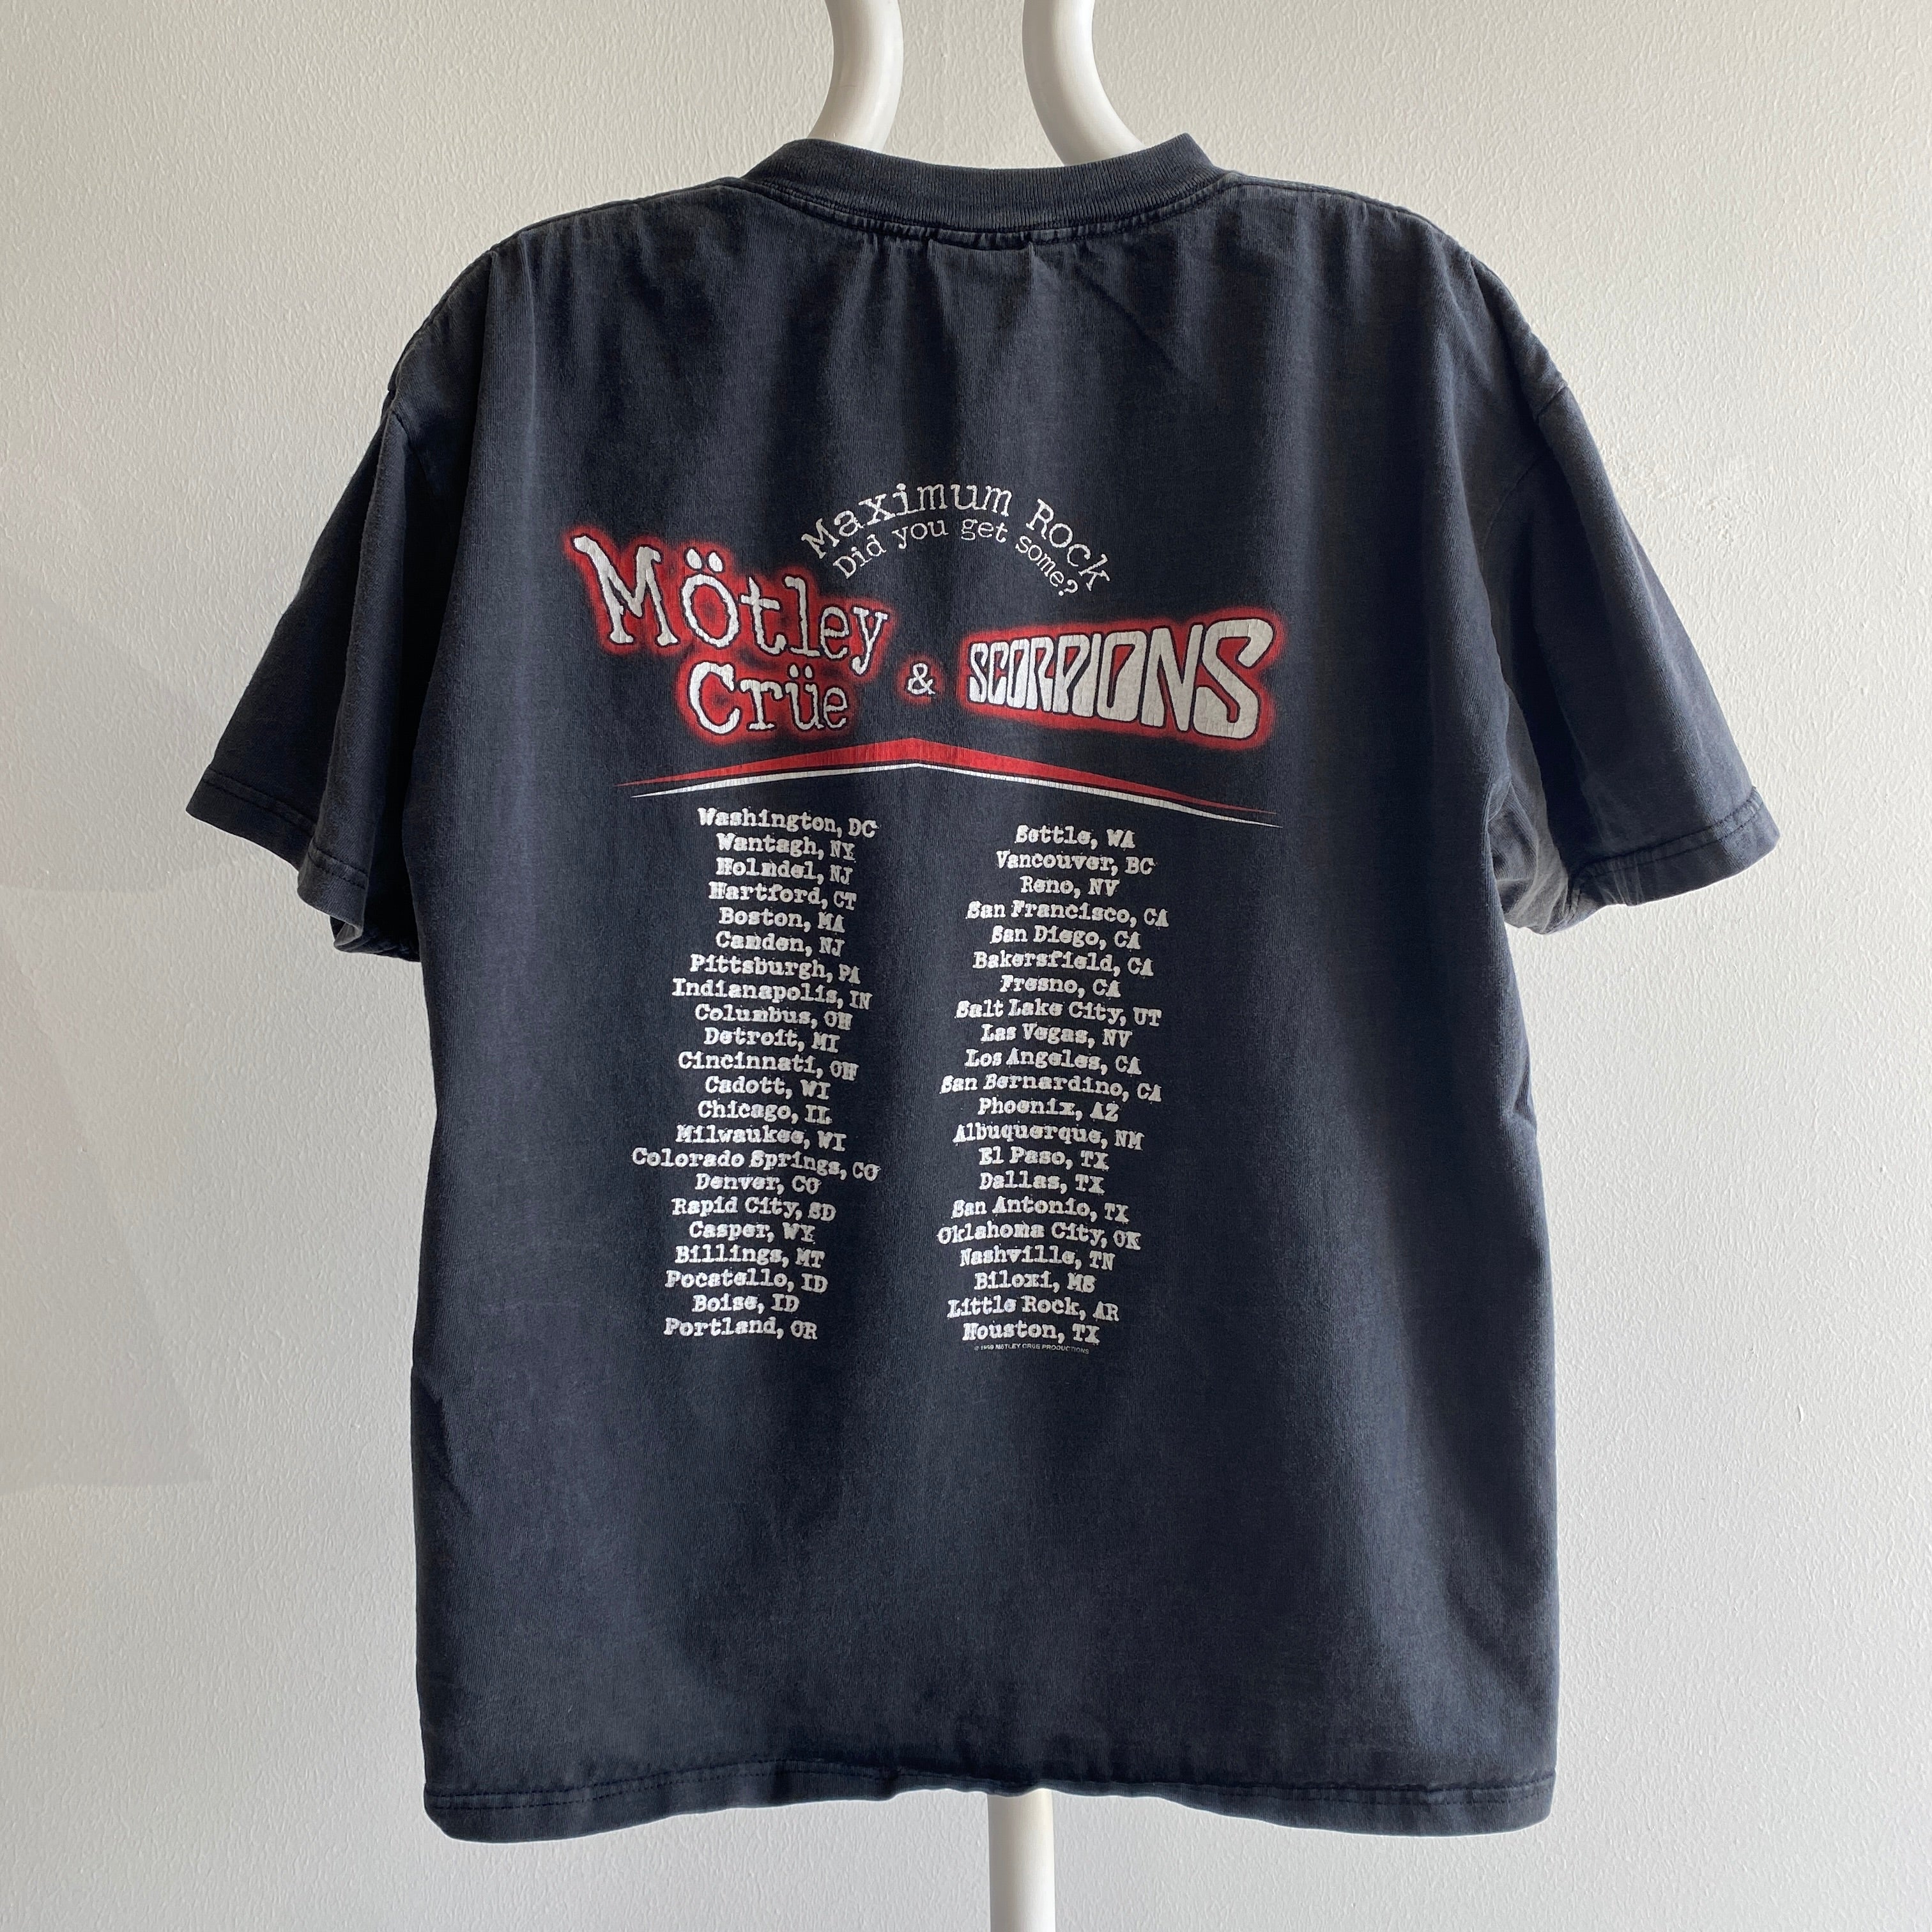 1999 Motley Crew & Scorpions Tour T-Shirt